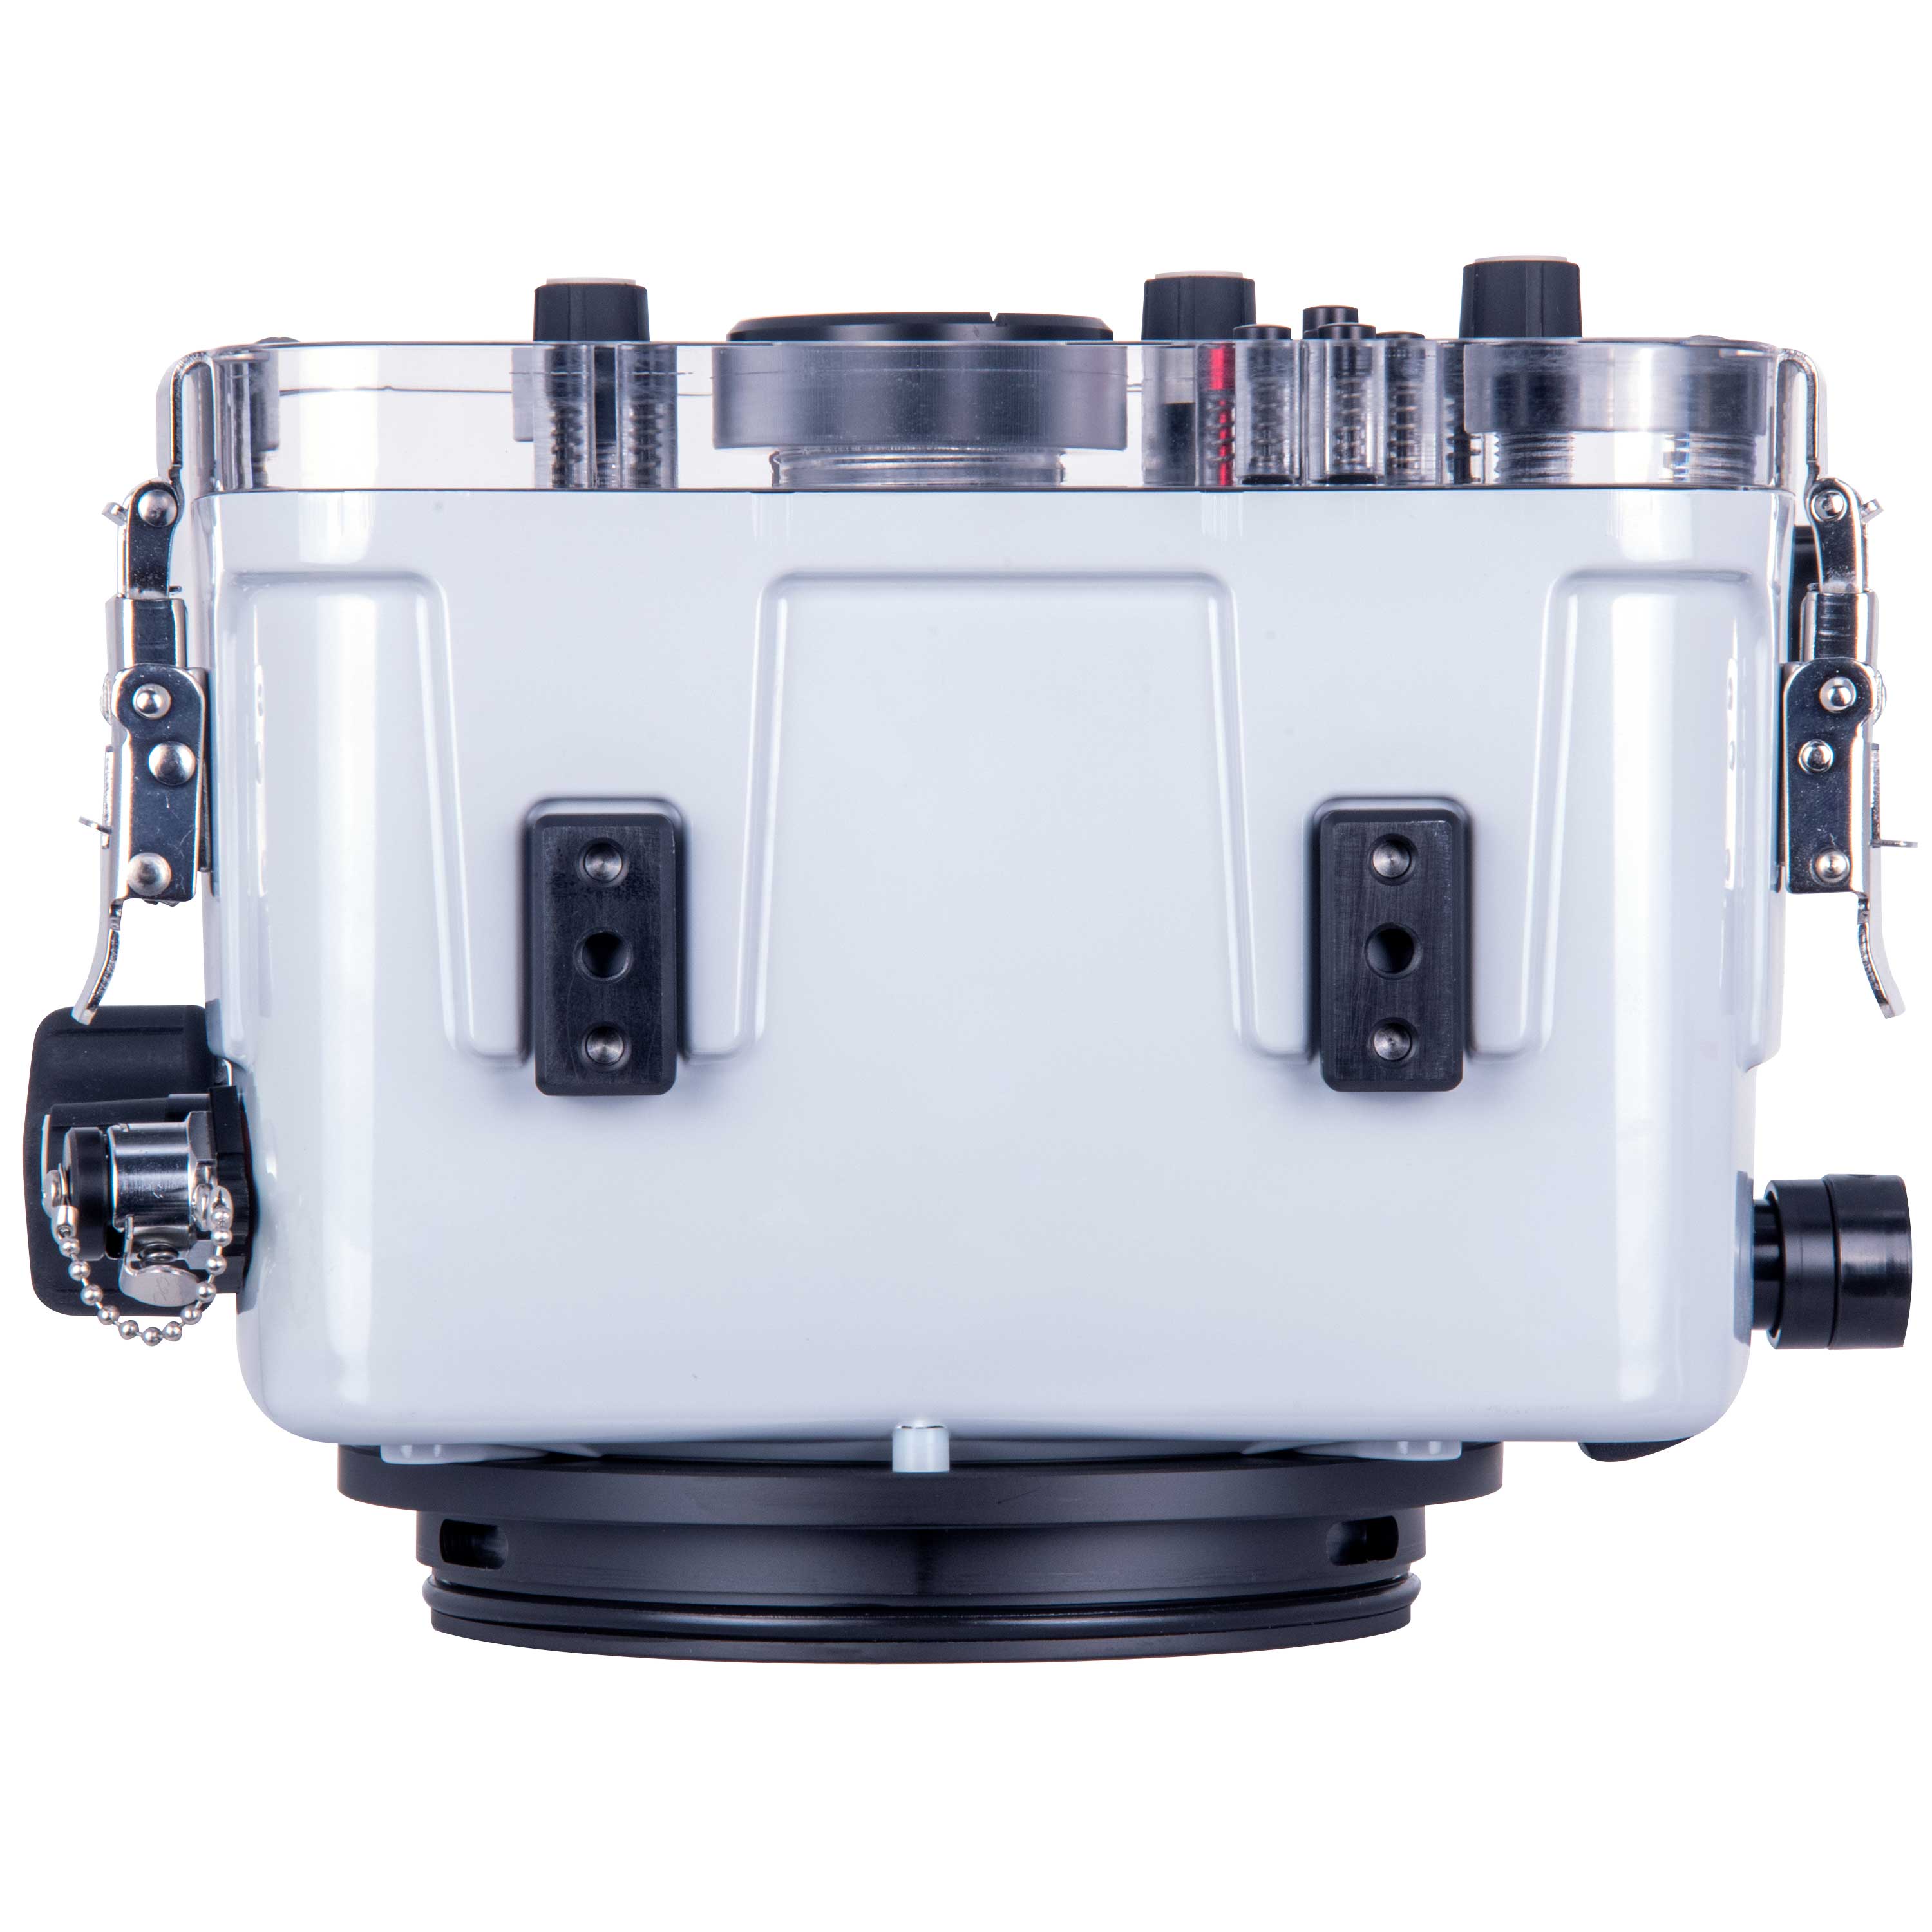 Ikelite Underwater Housing for Canon EOS 90D DSLR Cameras